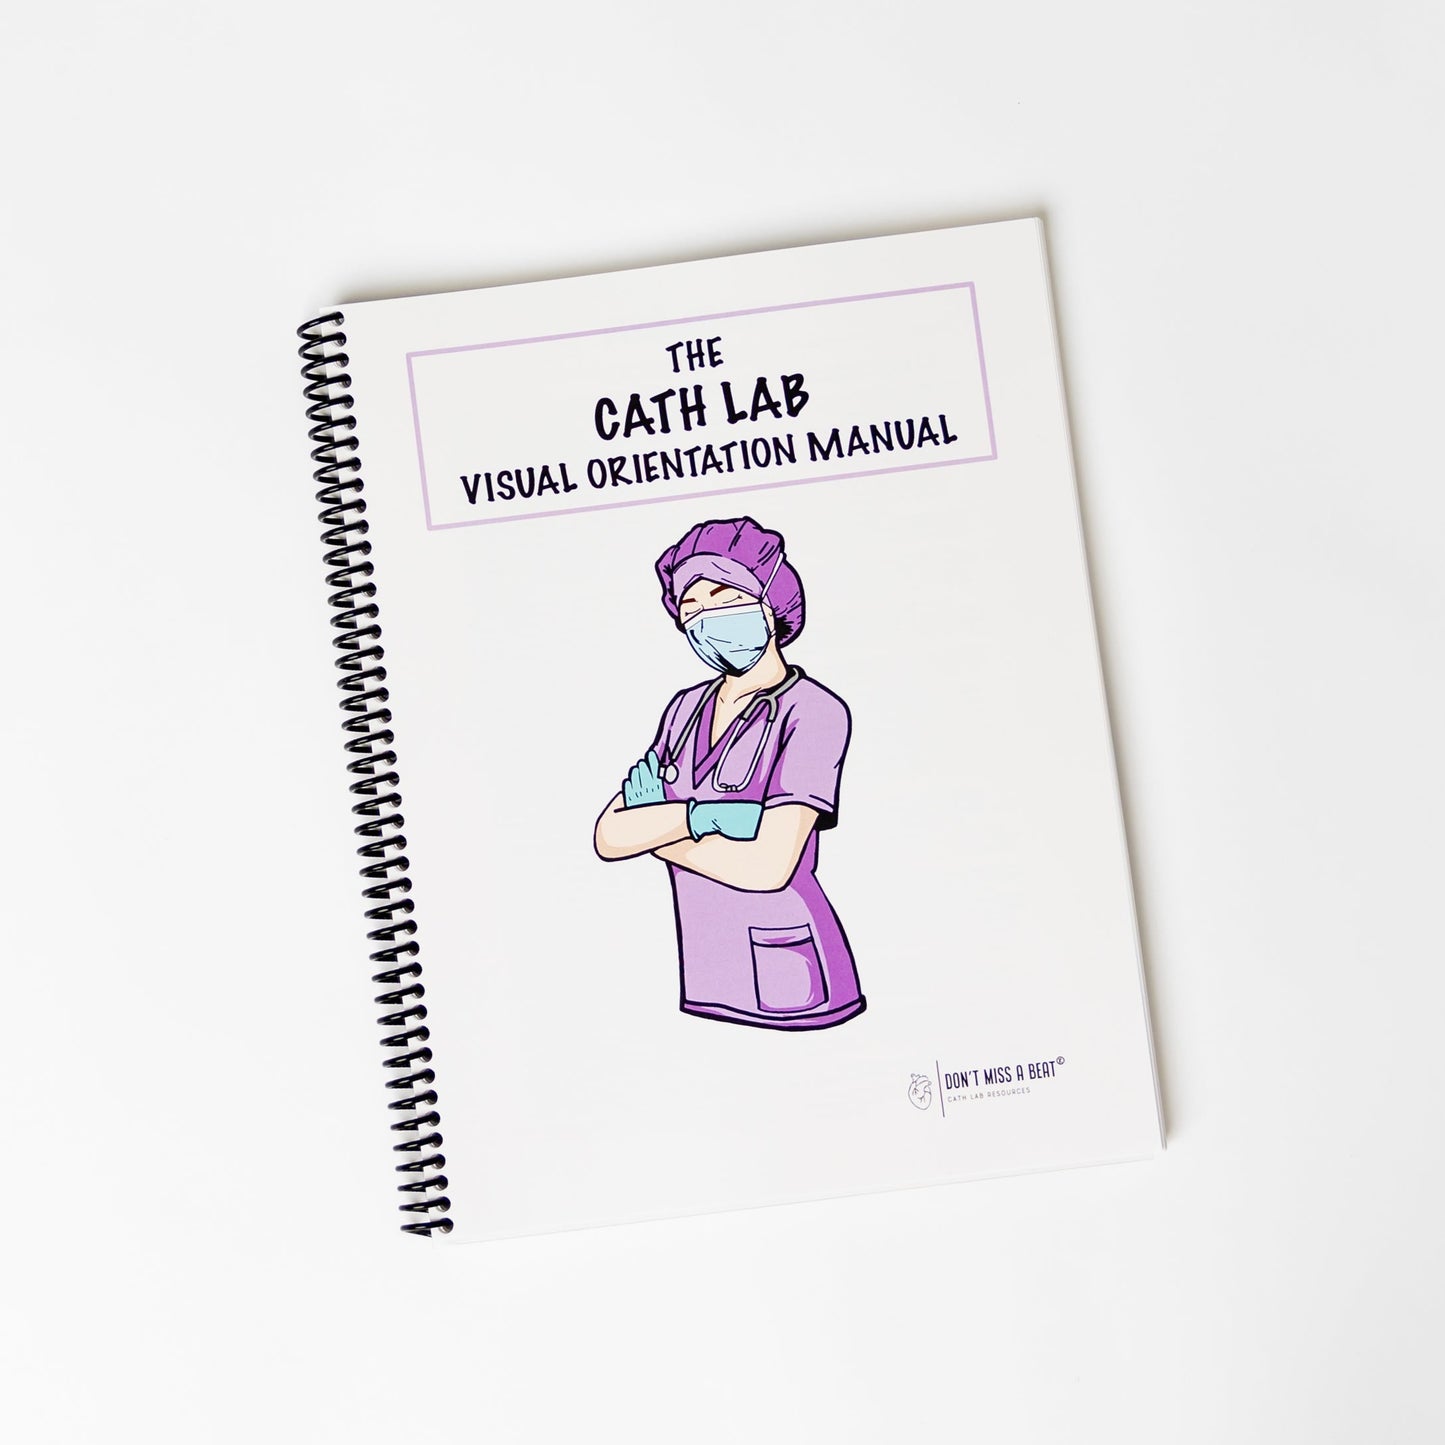 The Cath Lab Visual Orientation Manual